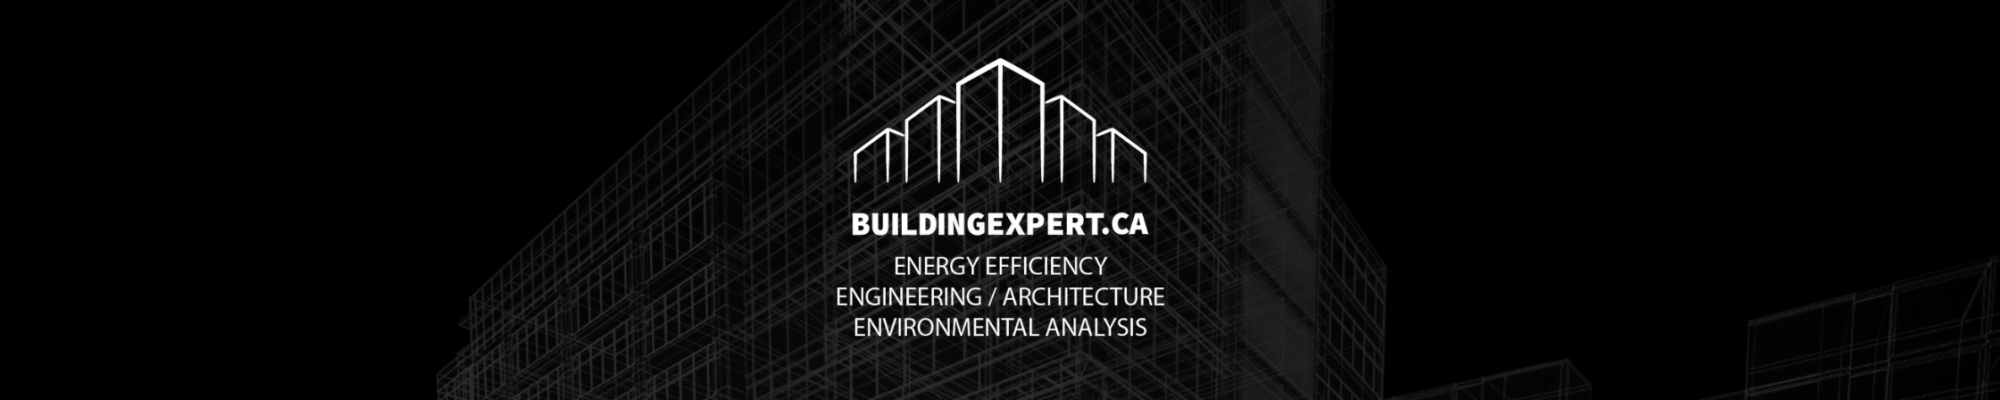 Buildingexpert_web_banner